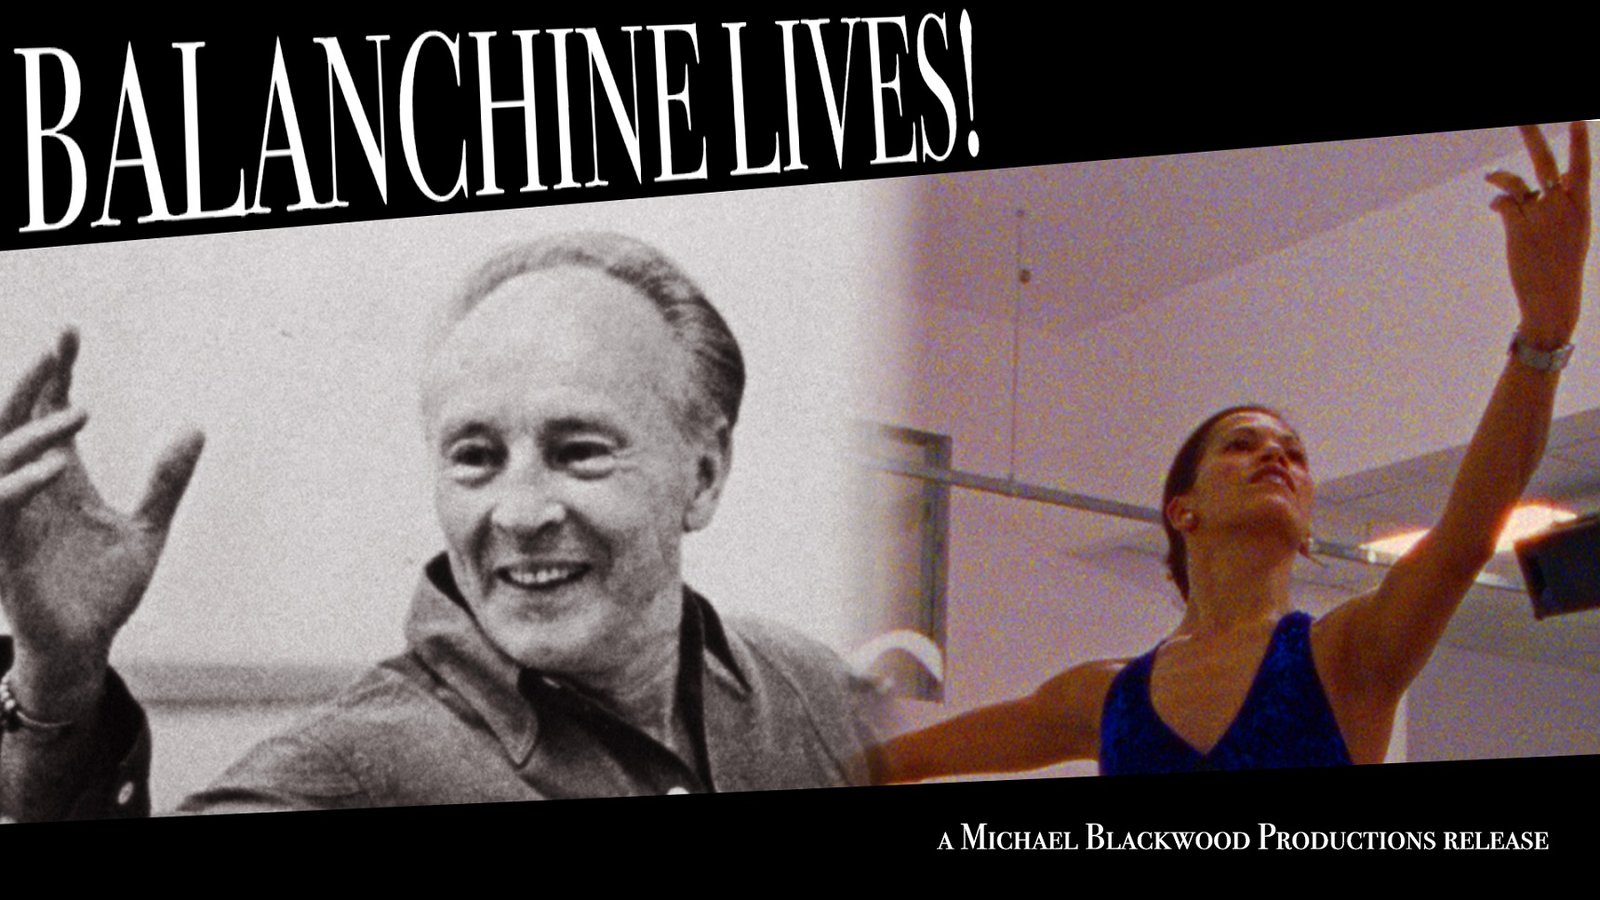 Balanchine Lives! - The Ballet of George Balanchine